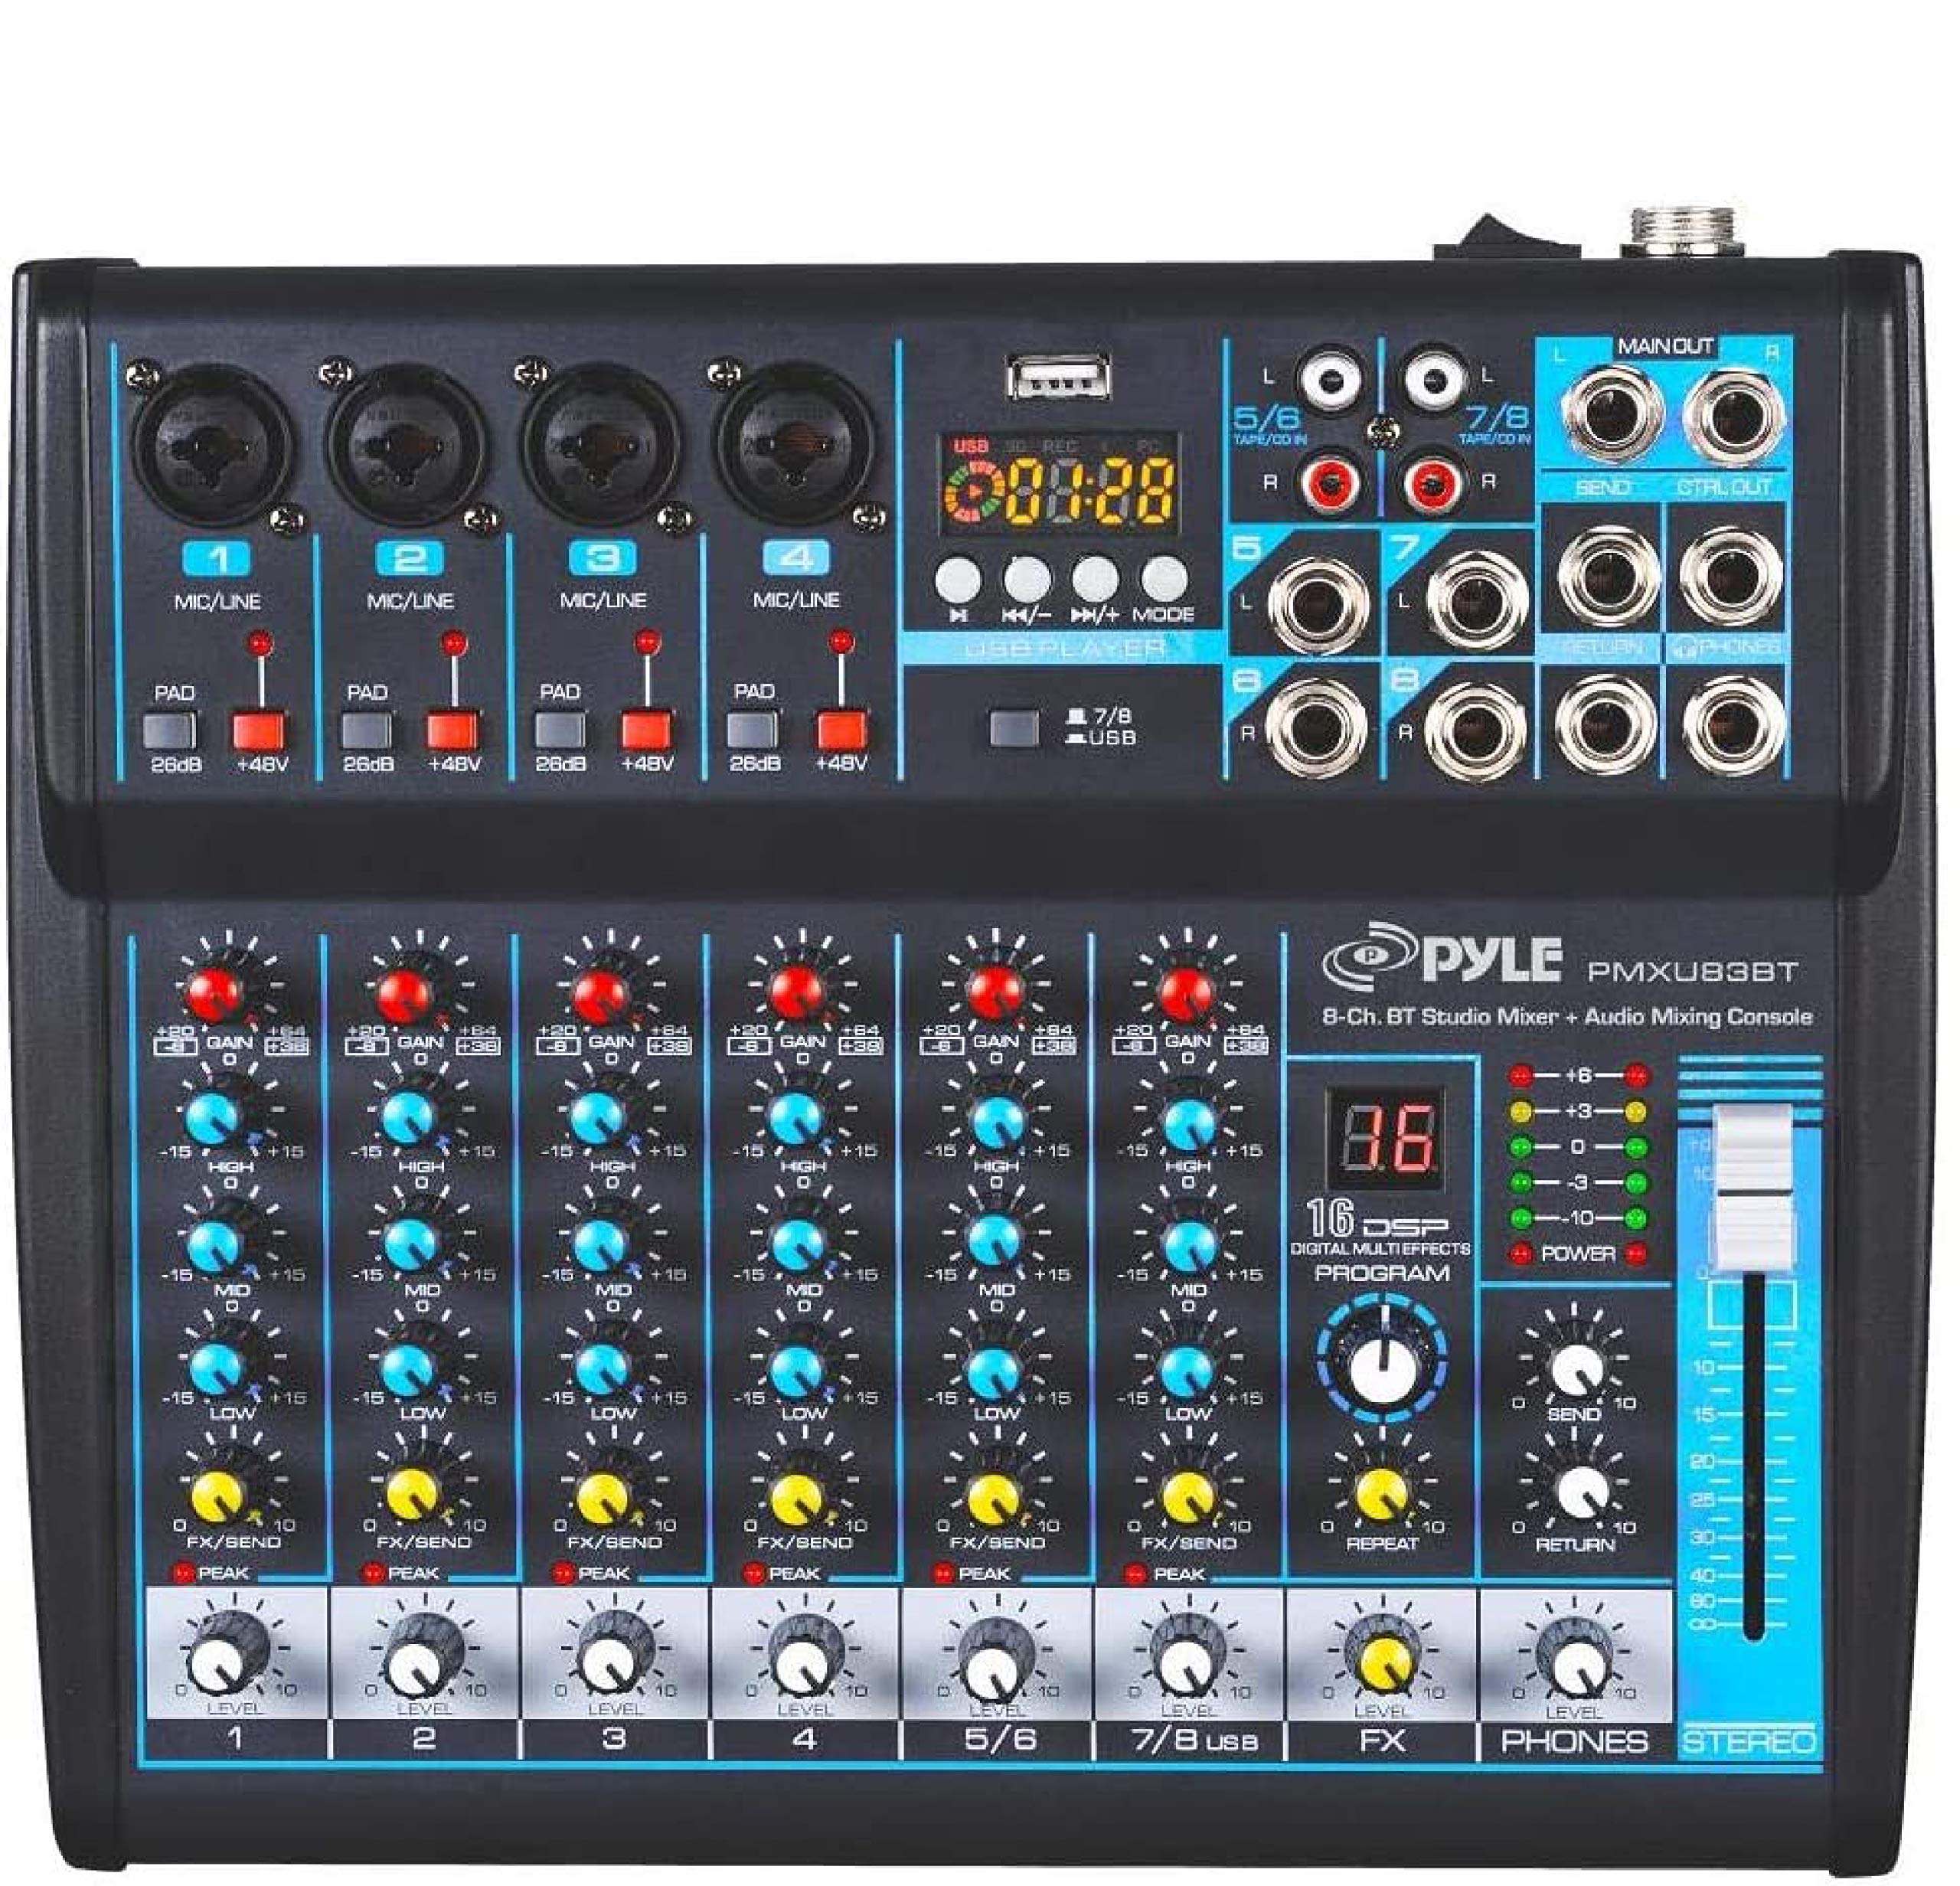 Pyle Professional Audio Mixer Sound Board Console Desk System Interface 8 Channel Digital USB Bluetooth MP3 Computer Input 48V Phantom Power Stereo DJ Studio FX 16Bit DSP Processor PMXU83BT, Black